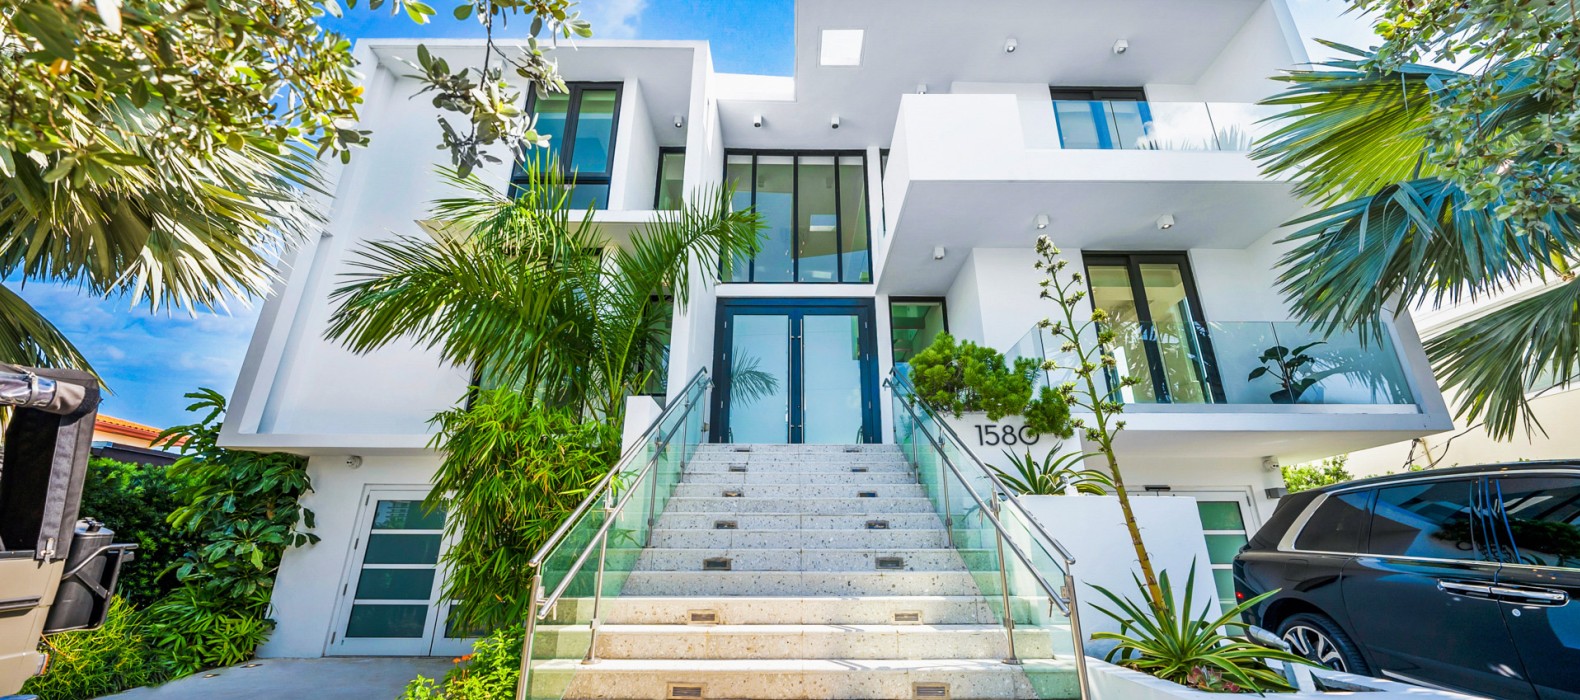 Entrance view of Villa Vivianna in Miami